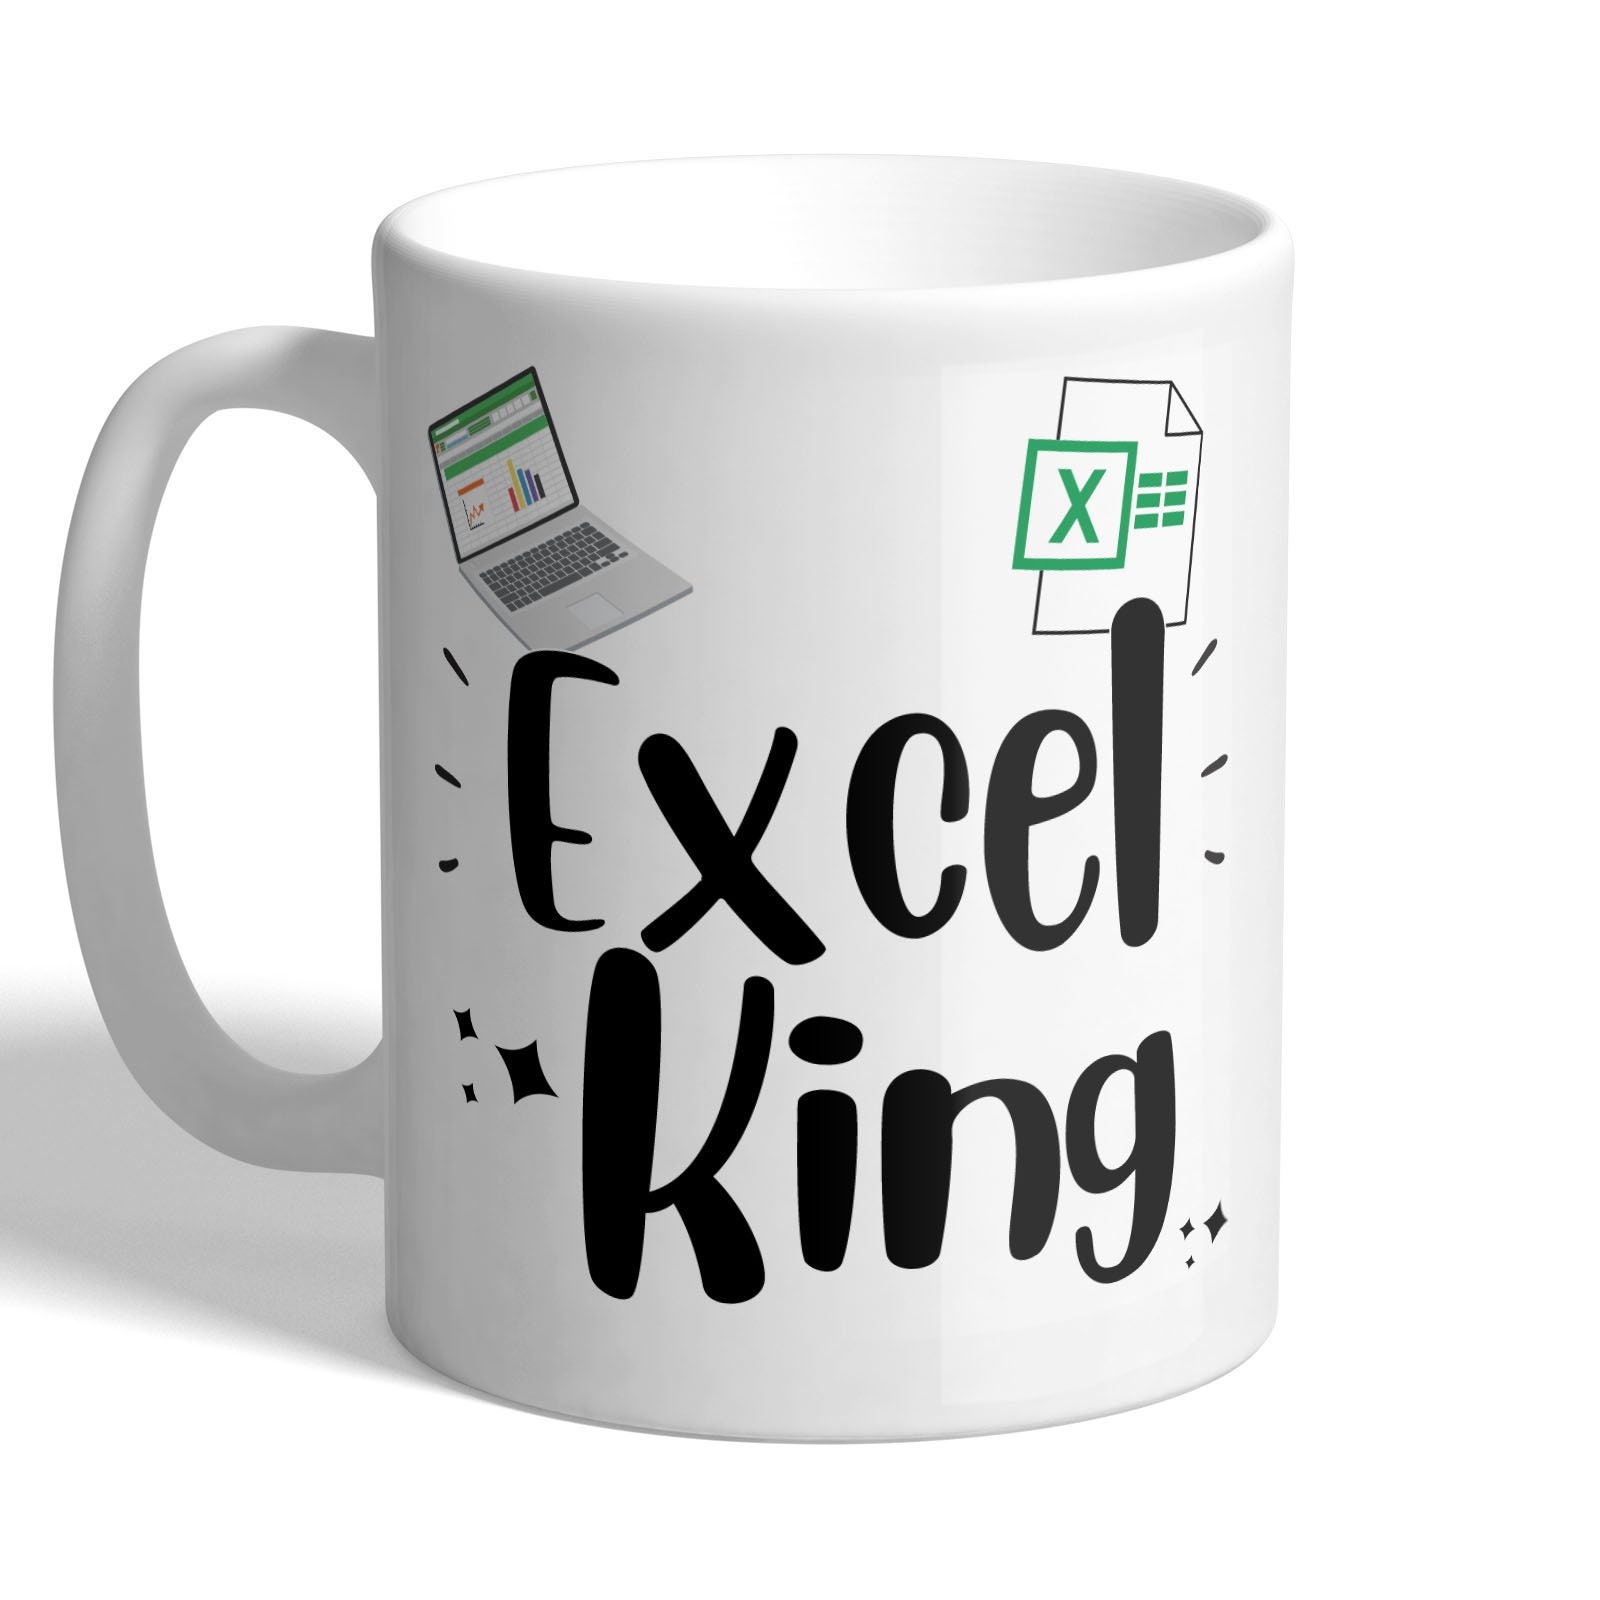 Excel Mug Black